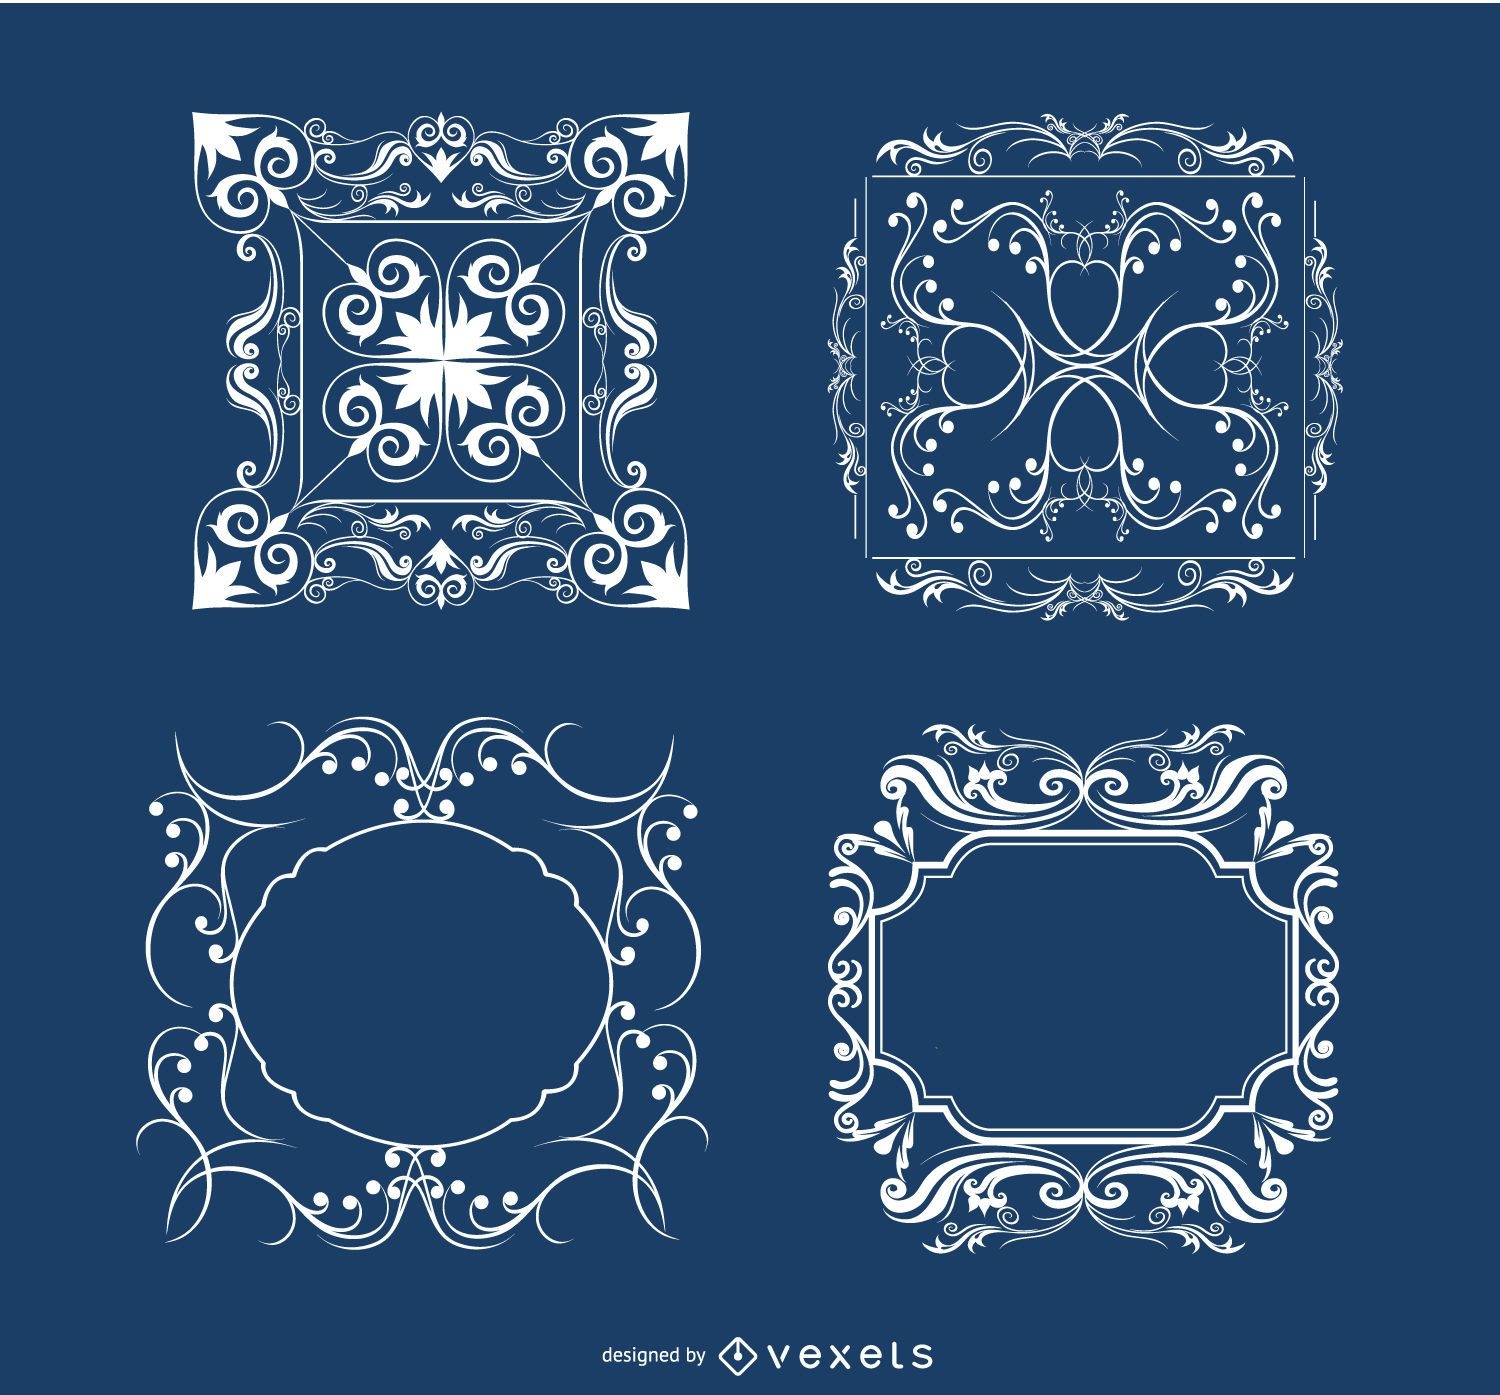 4 Floral ornaments frames